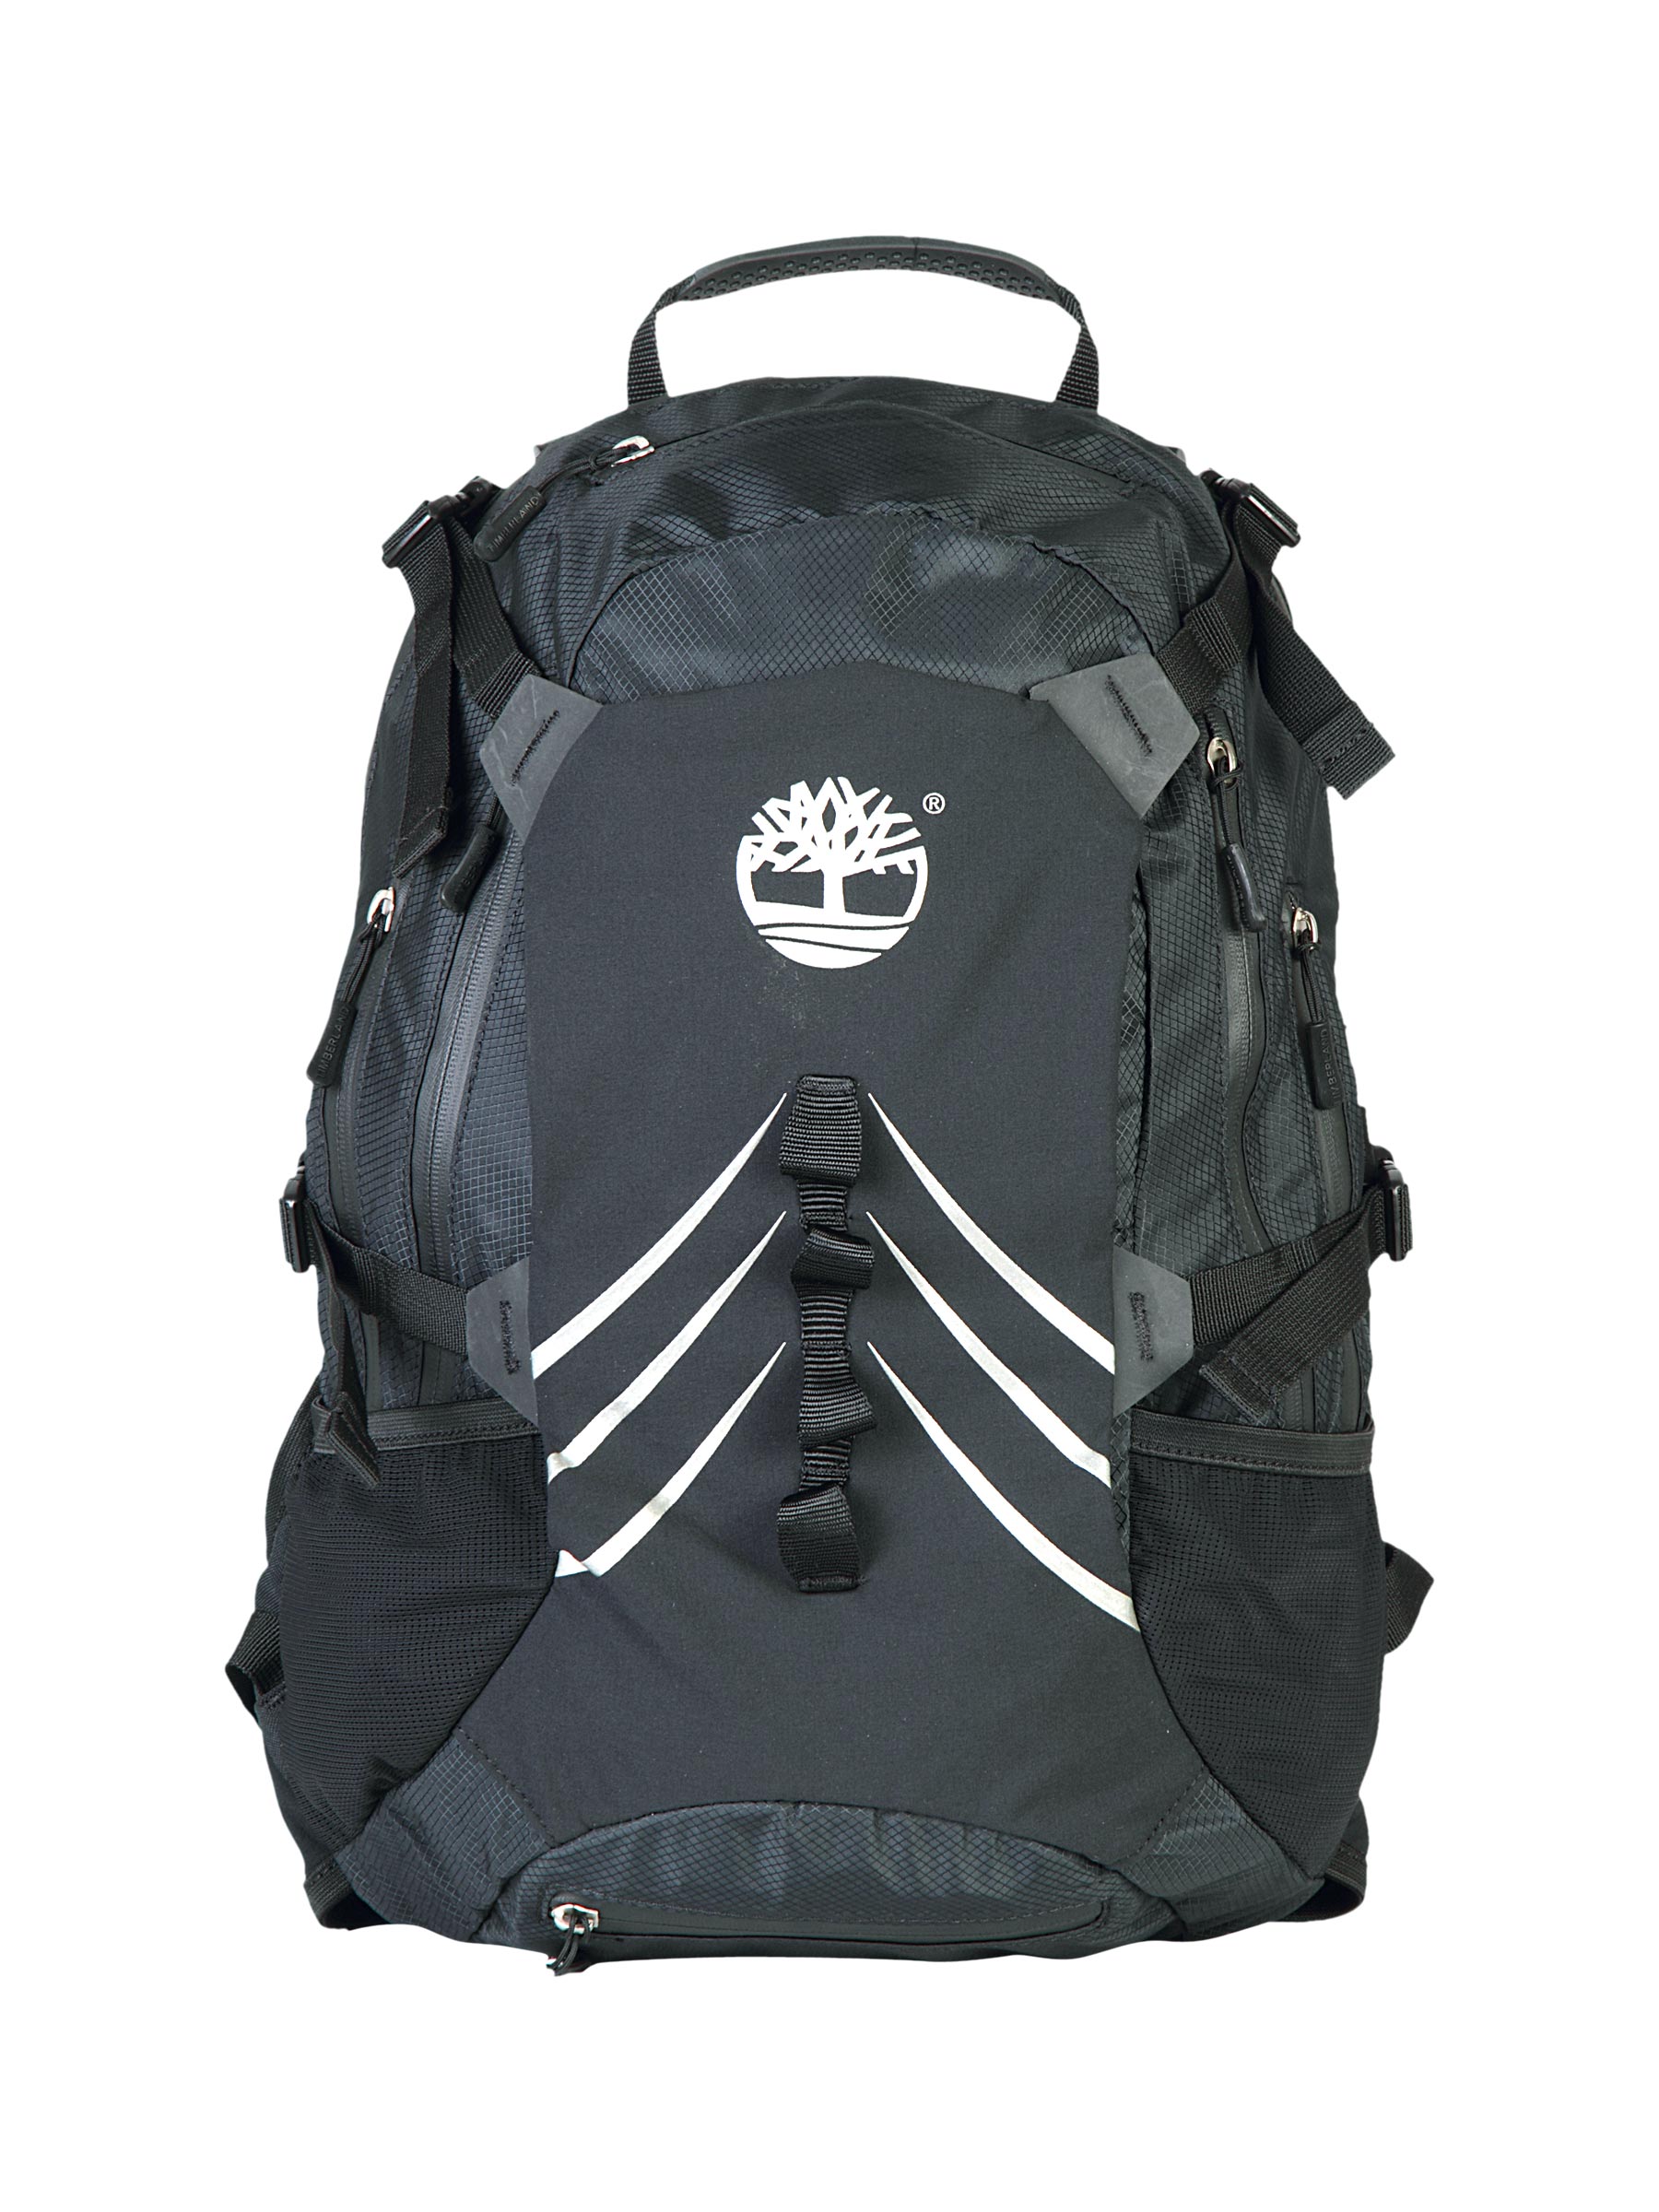 Timberland Unisex Solid Black Backpacks